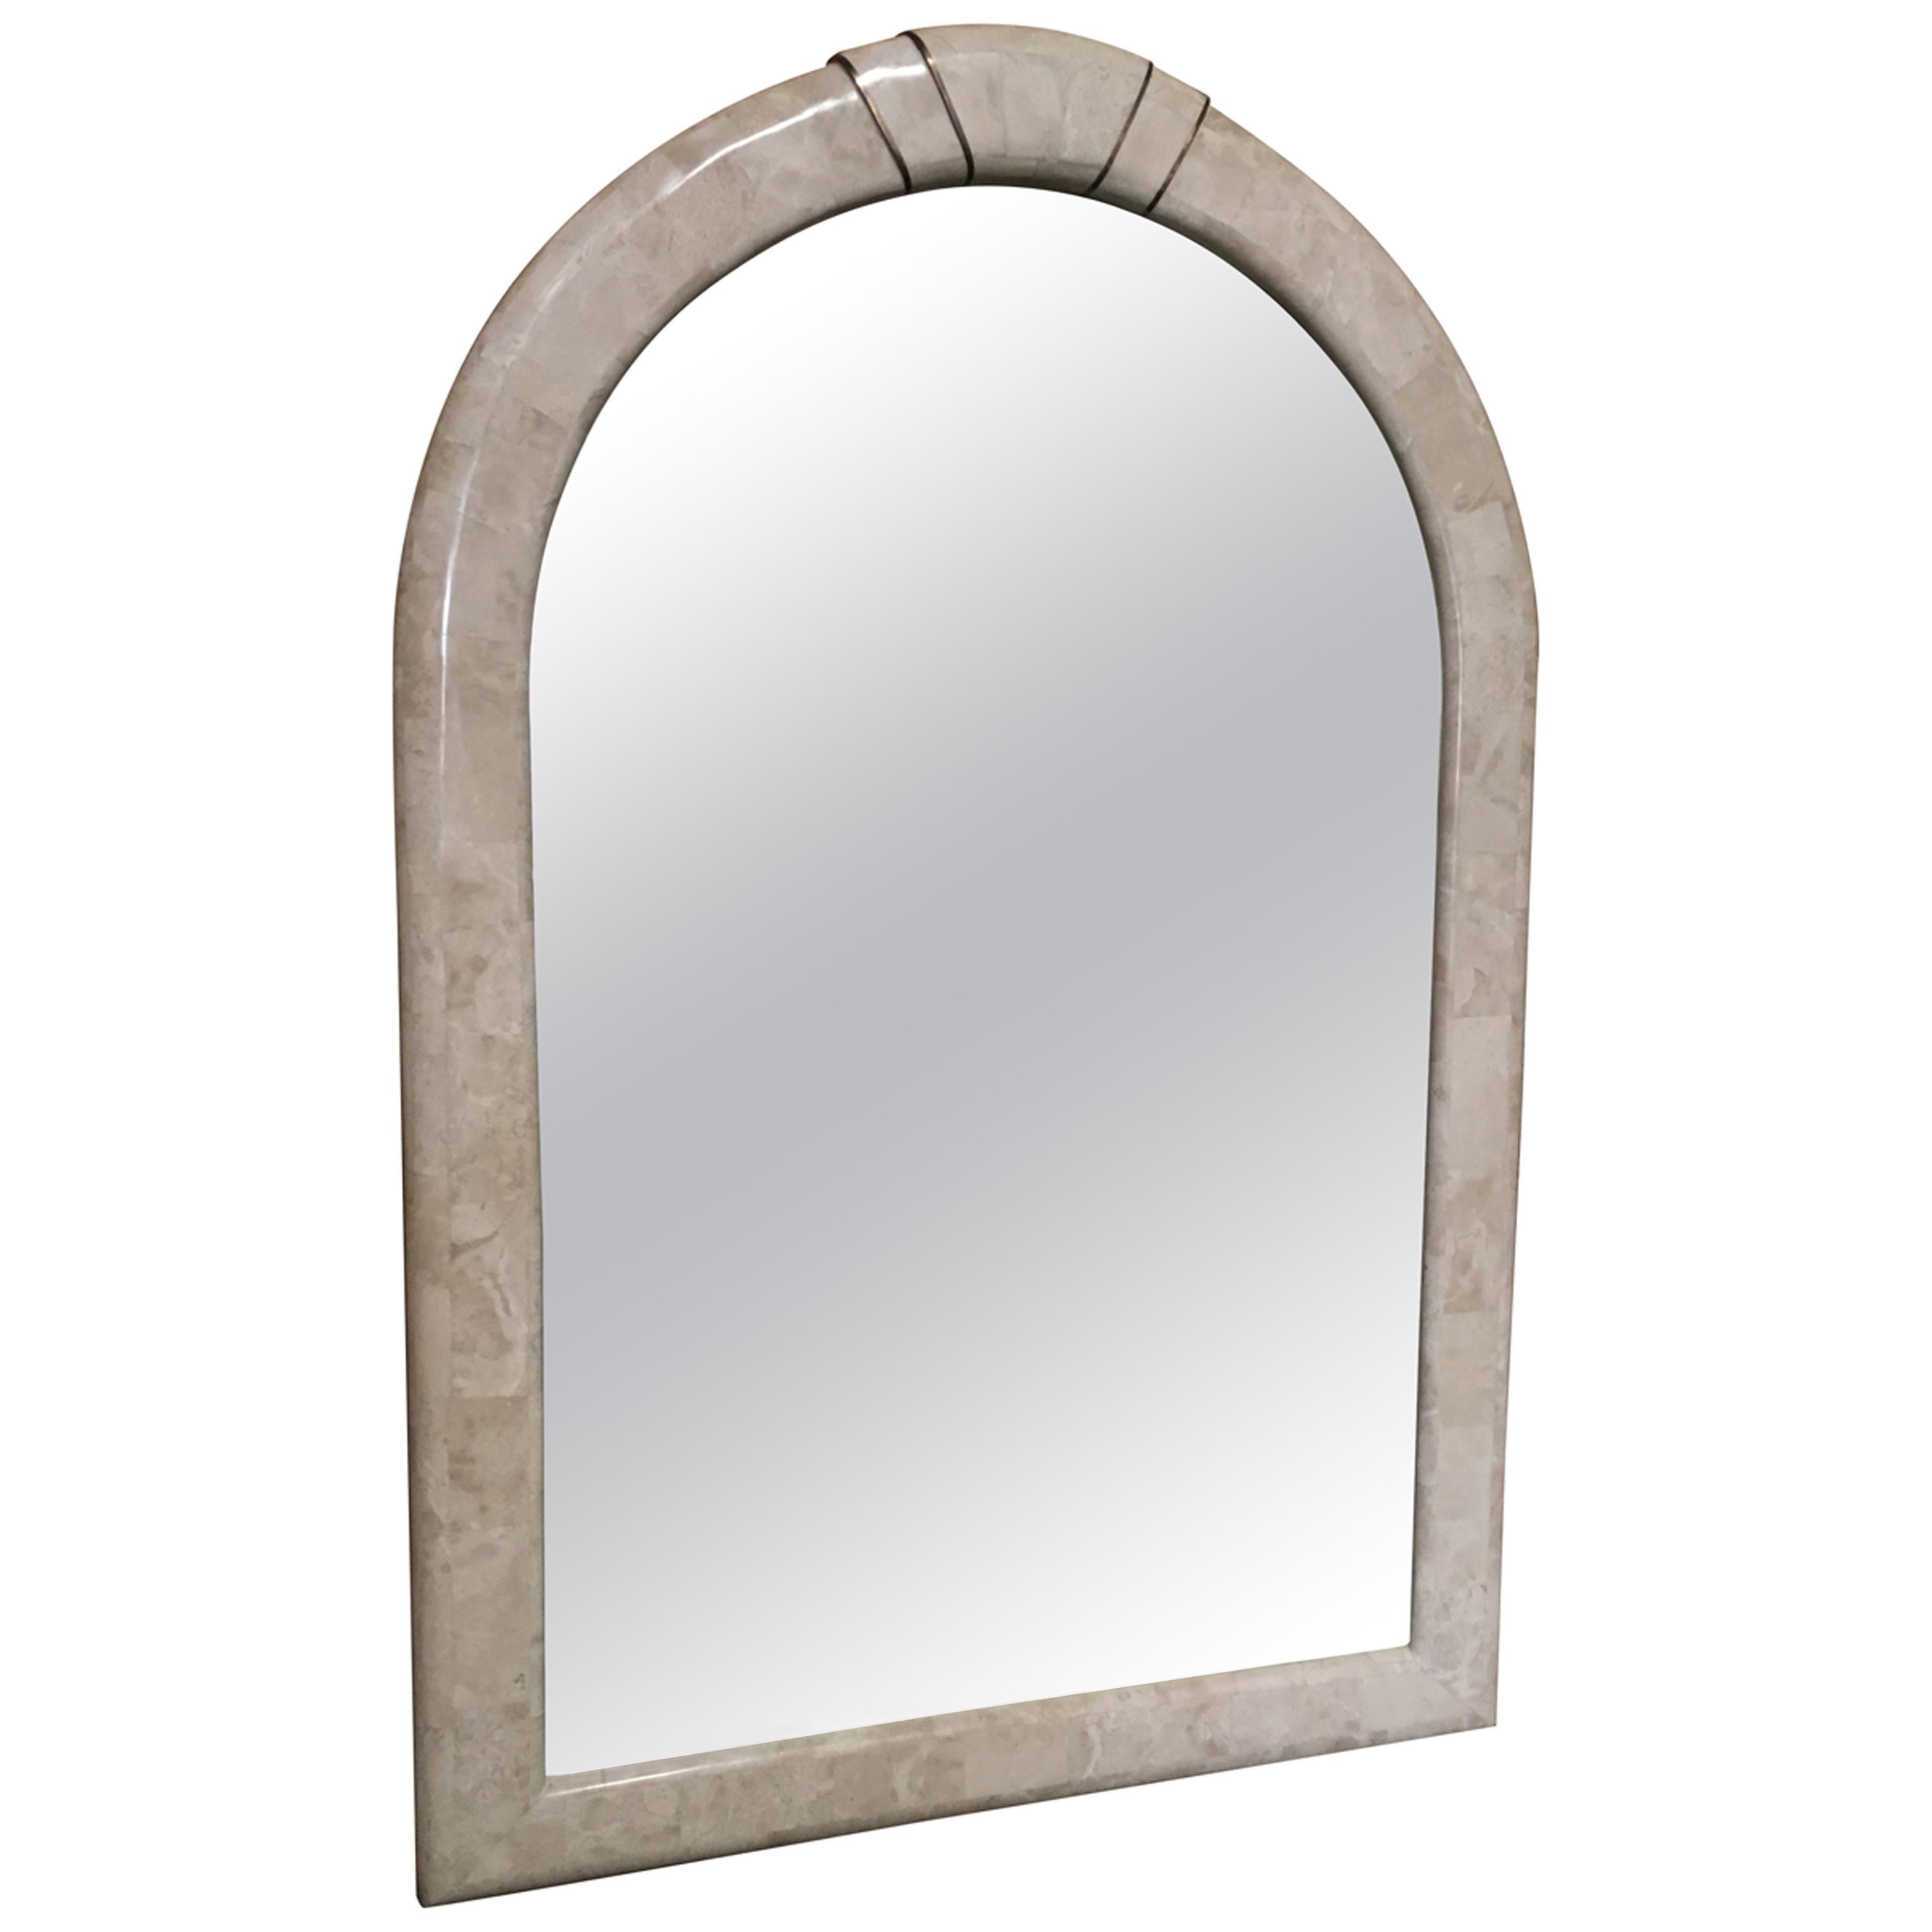 Tessellated Stone Framed Mirror